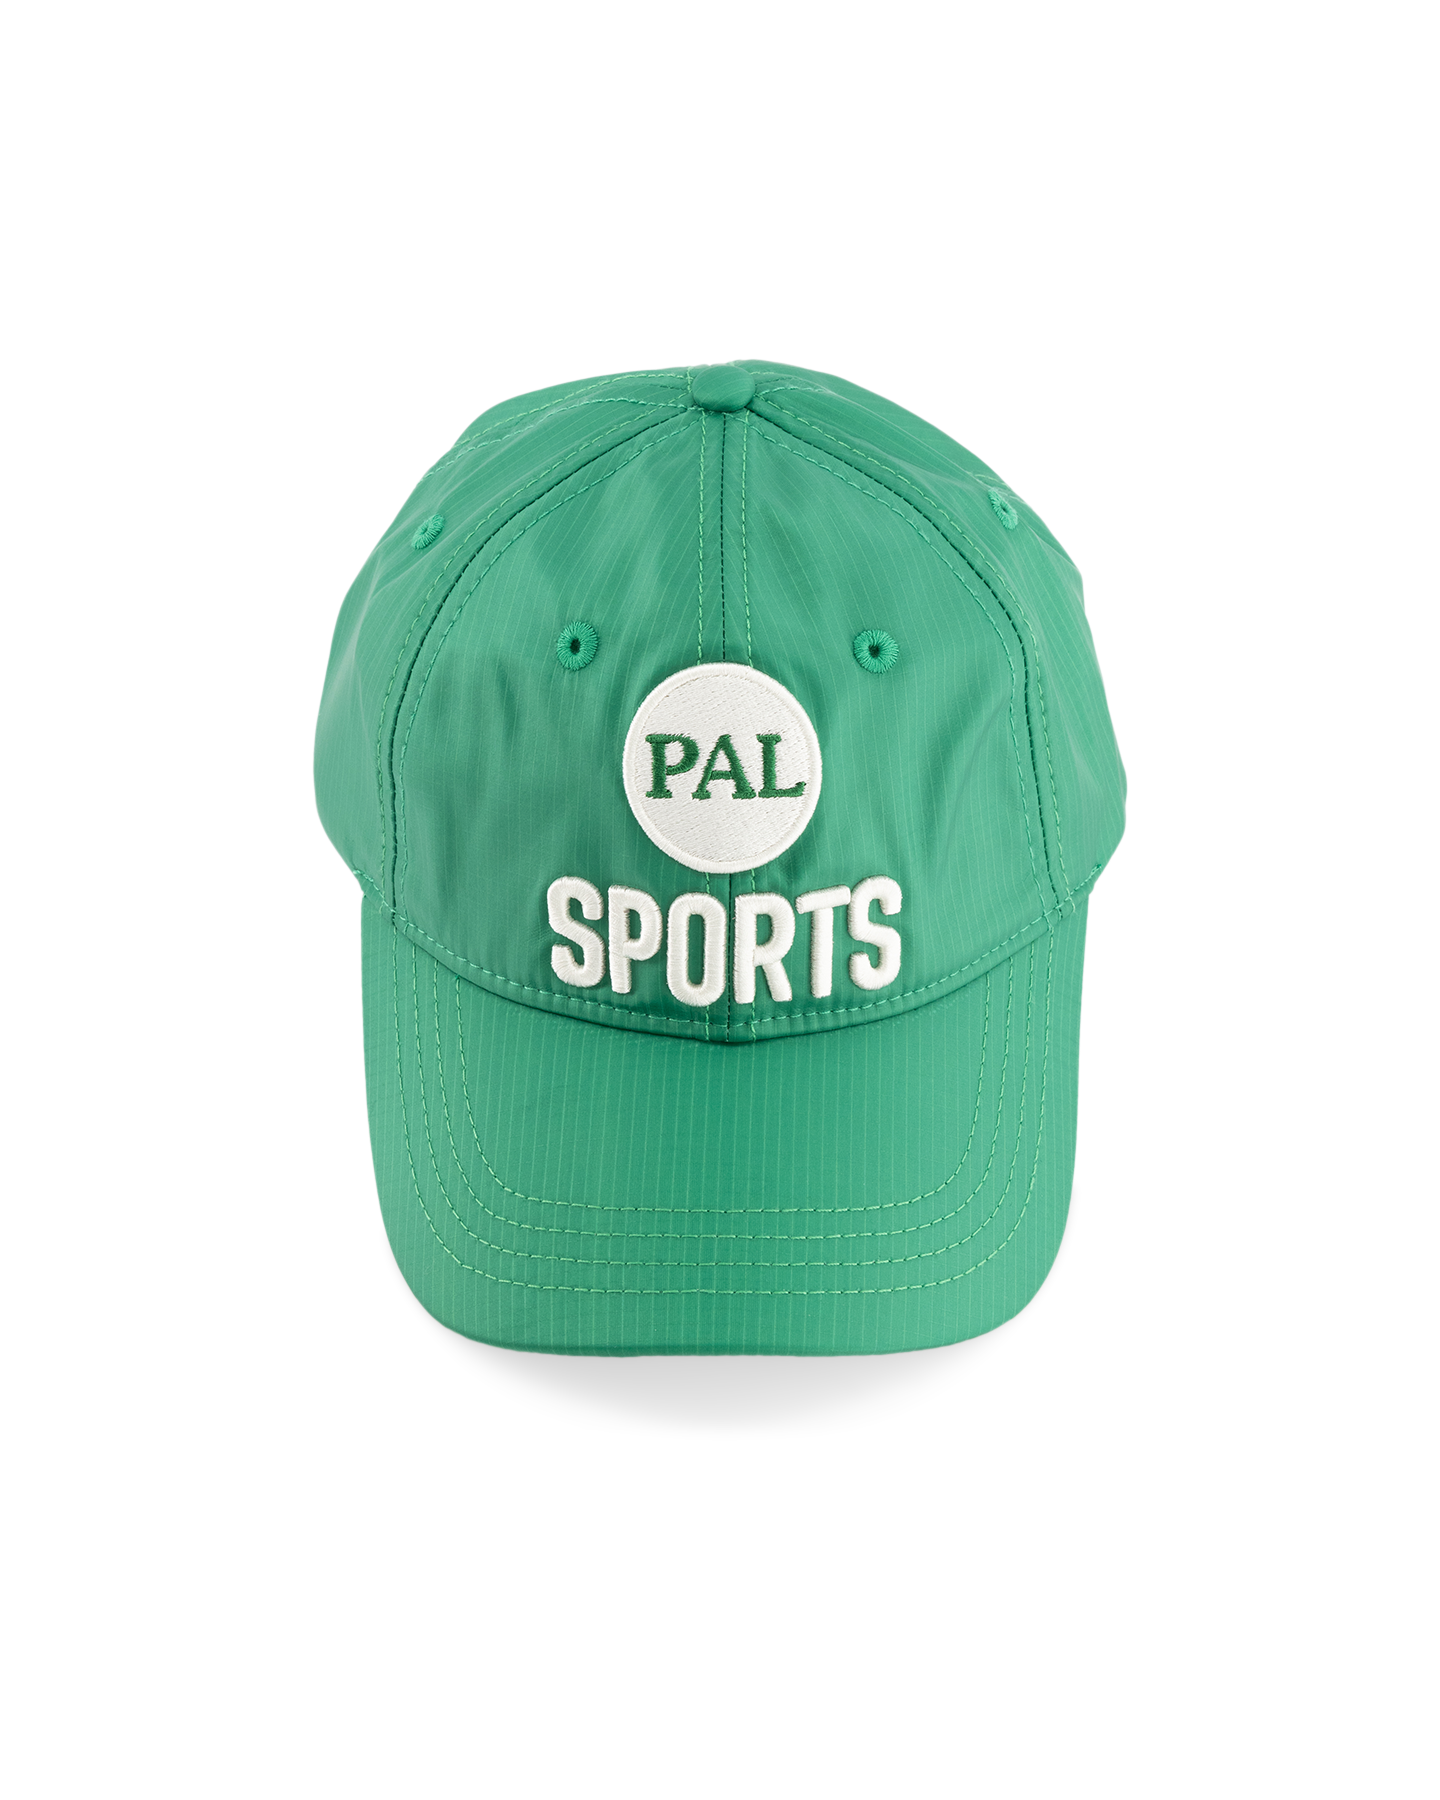 PAL Sporting Goods Broadcast Cap GROEN 1